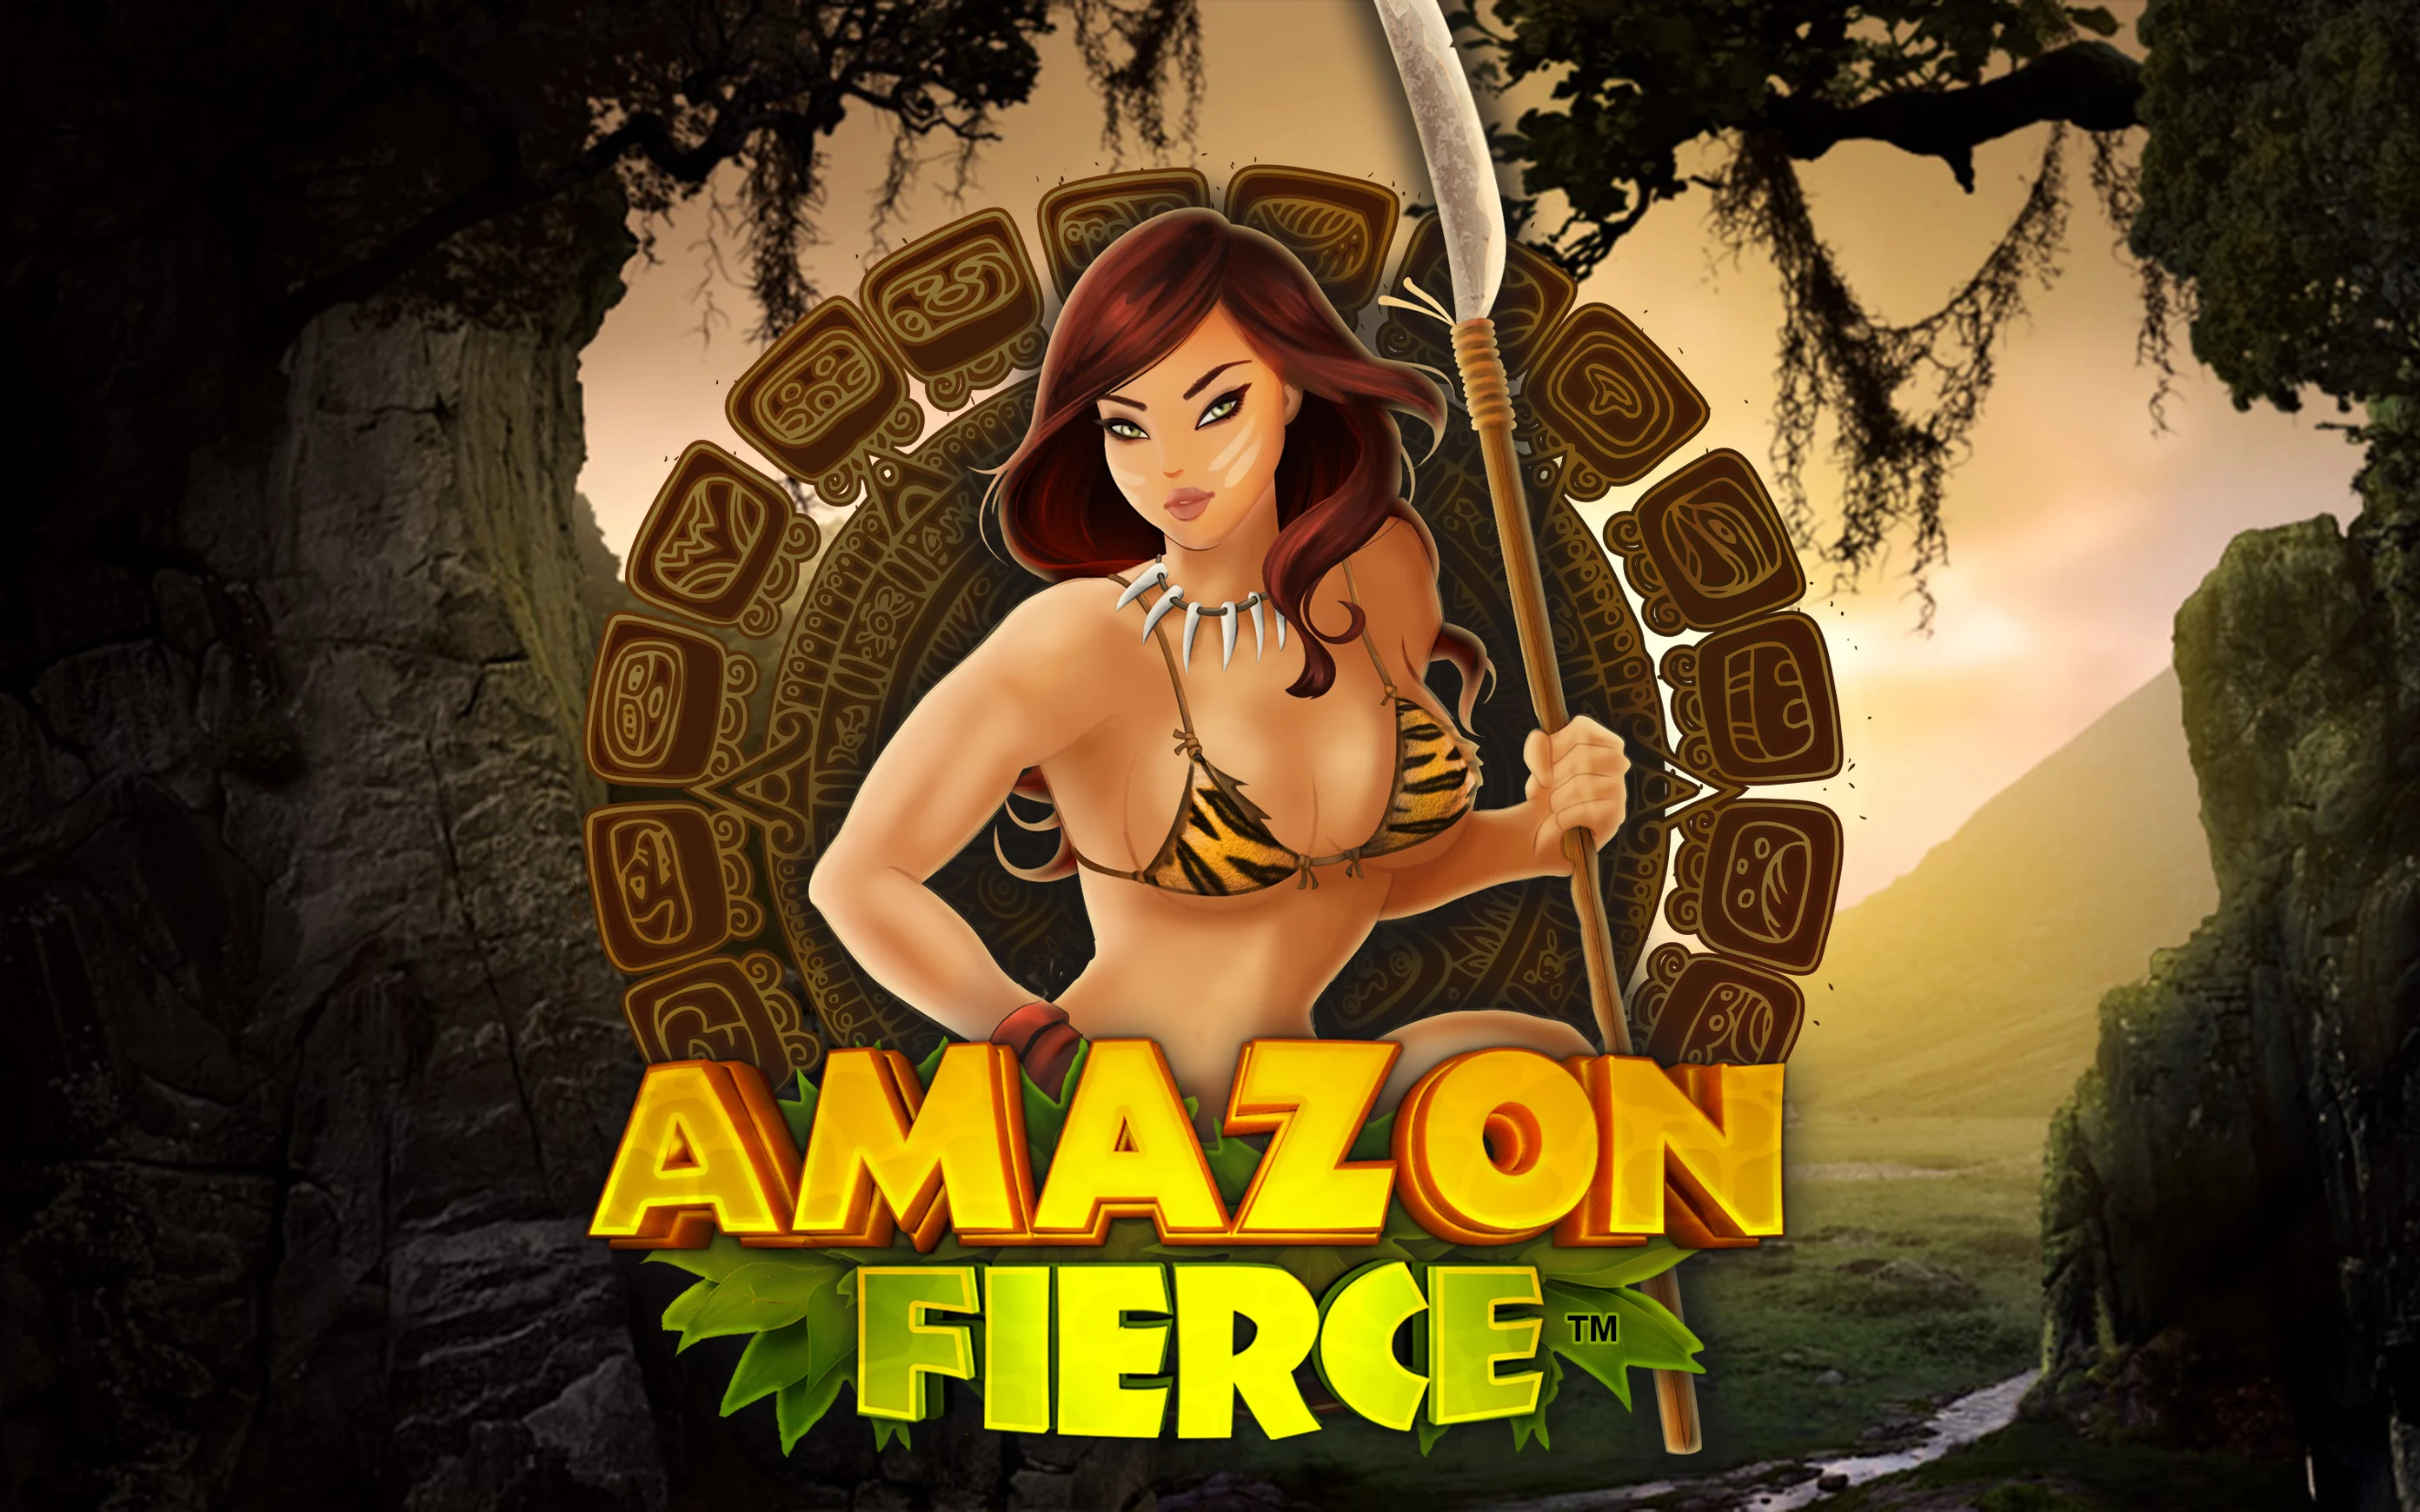 Play Amazon Fierce Dice on Starcasino.be online casino